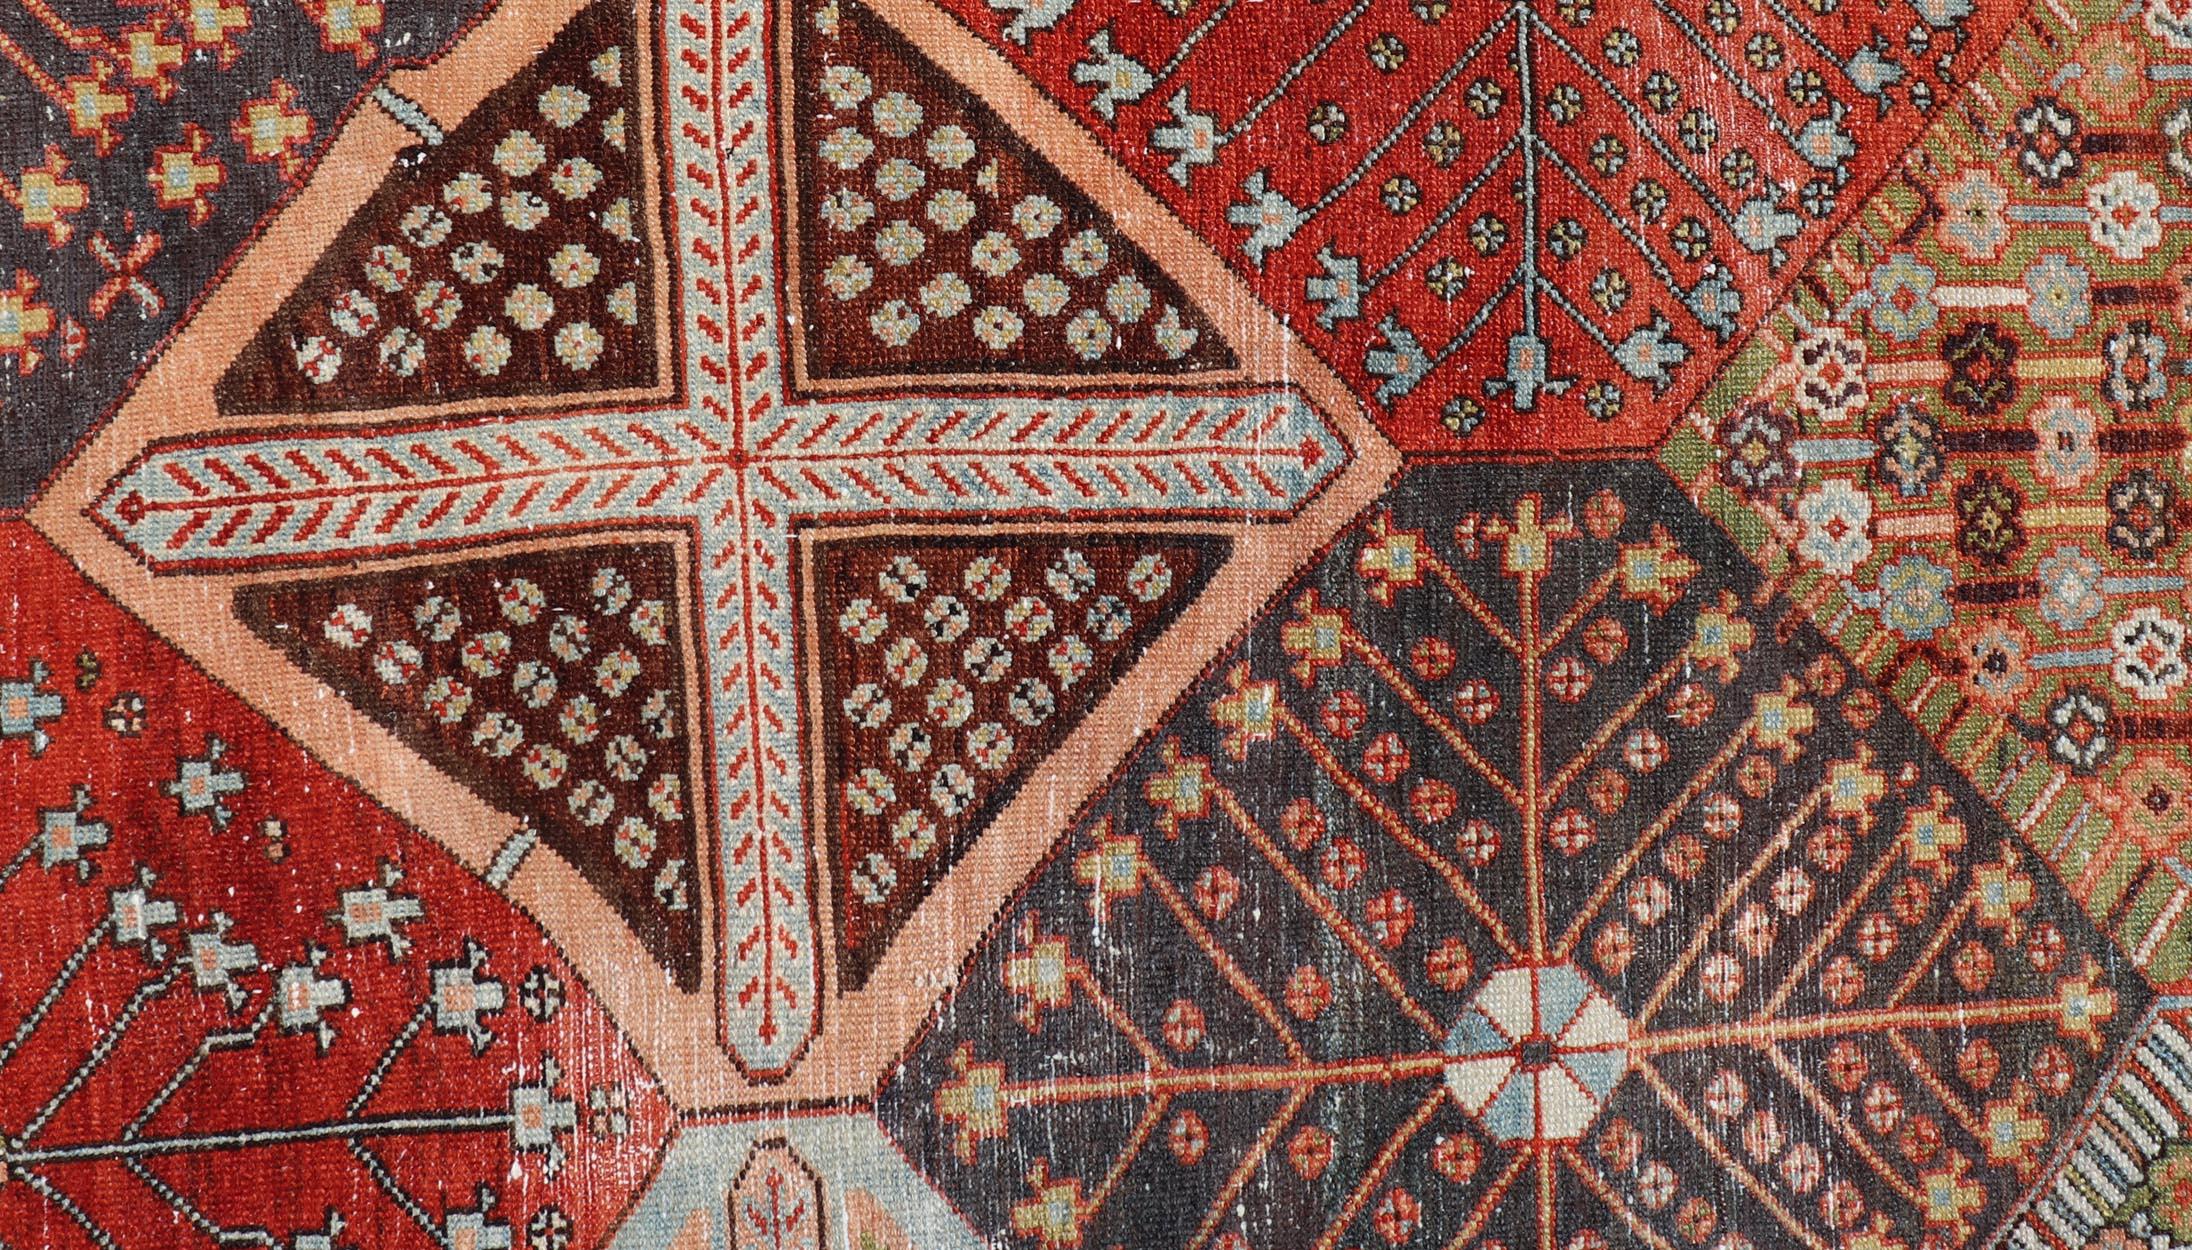 20th Century Antique Persian All-Over Large Diamond Design Bakhtiari Rug in Multi Colors